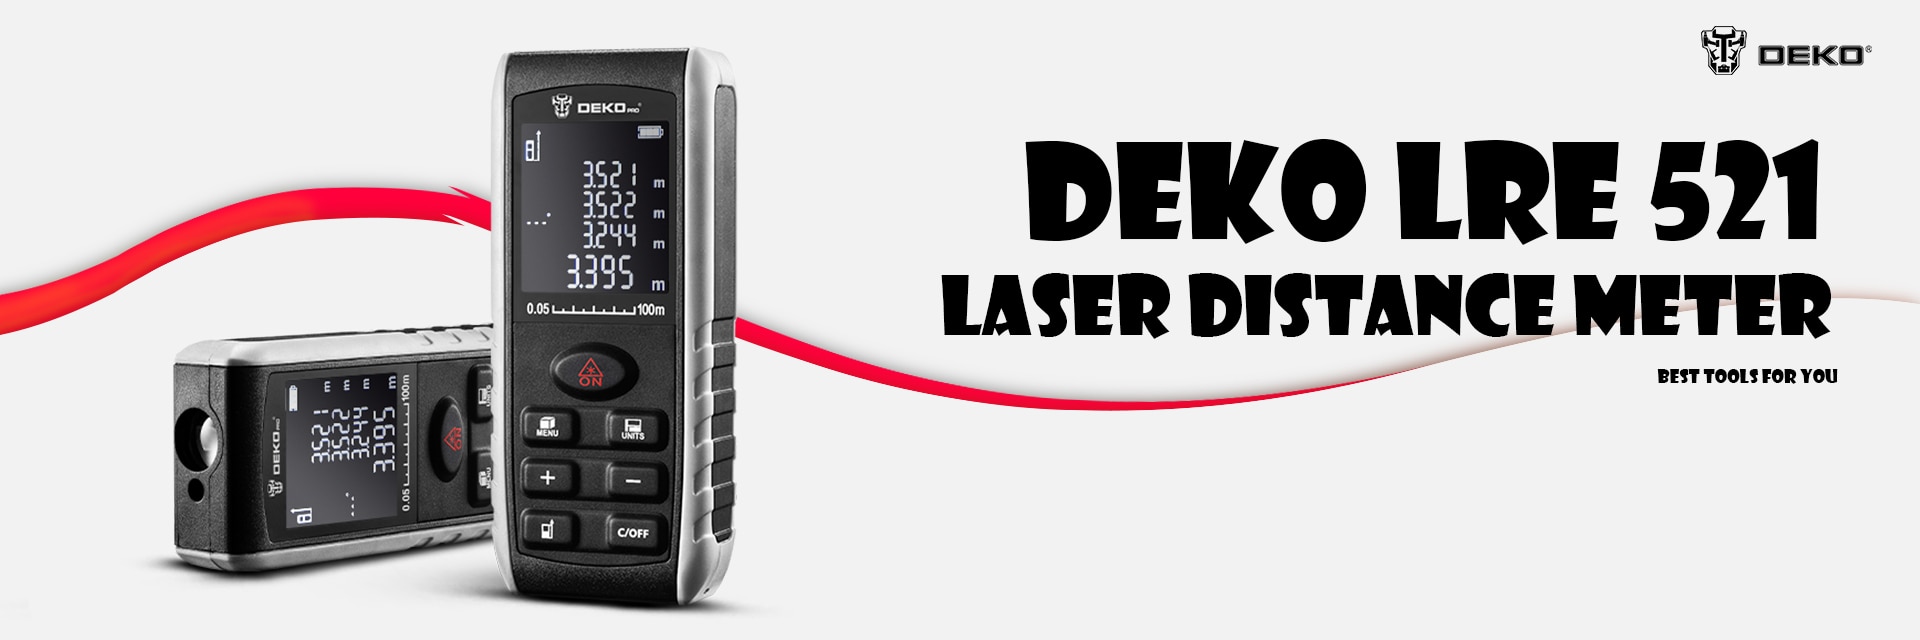 LRE521 Laser Distance Meter